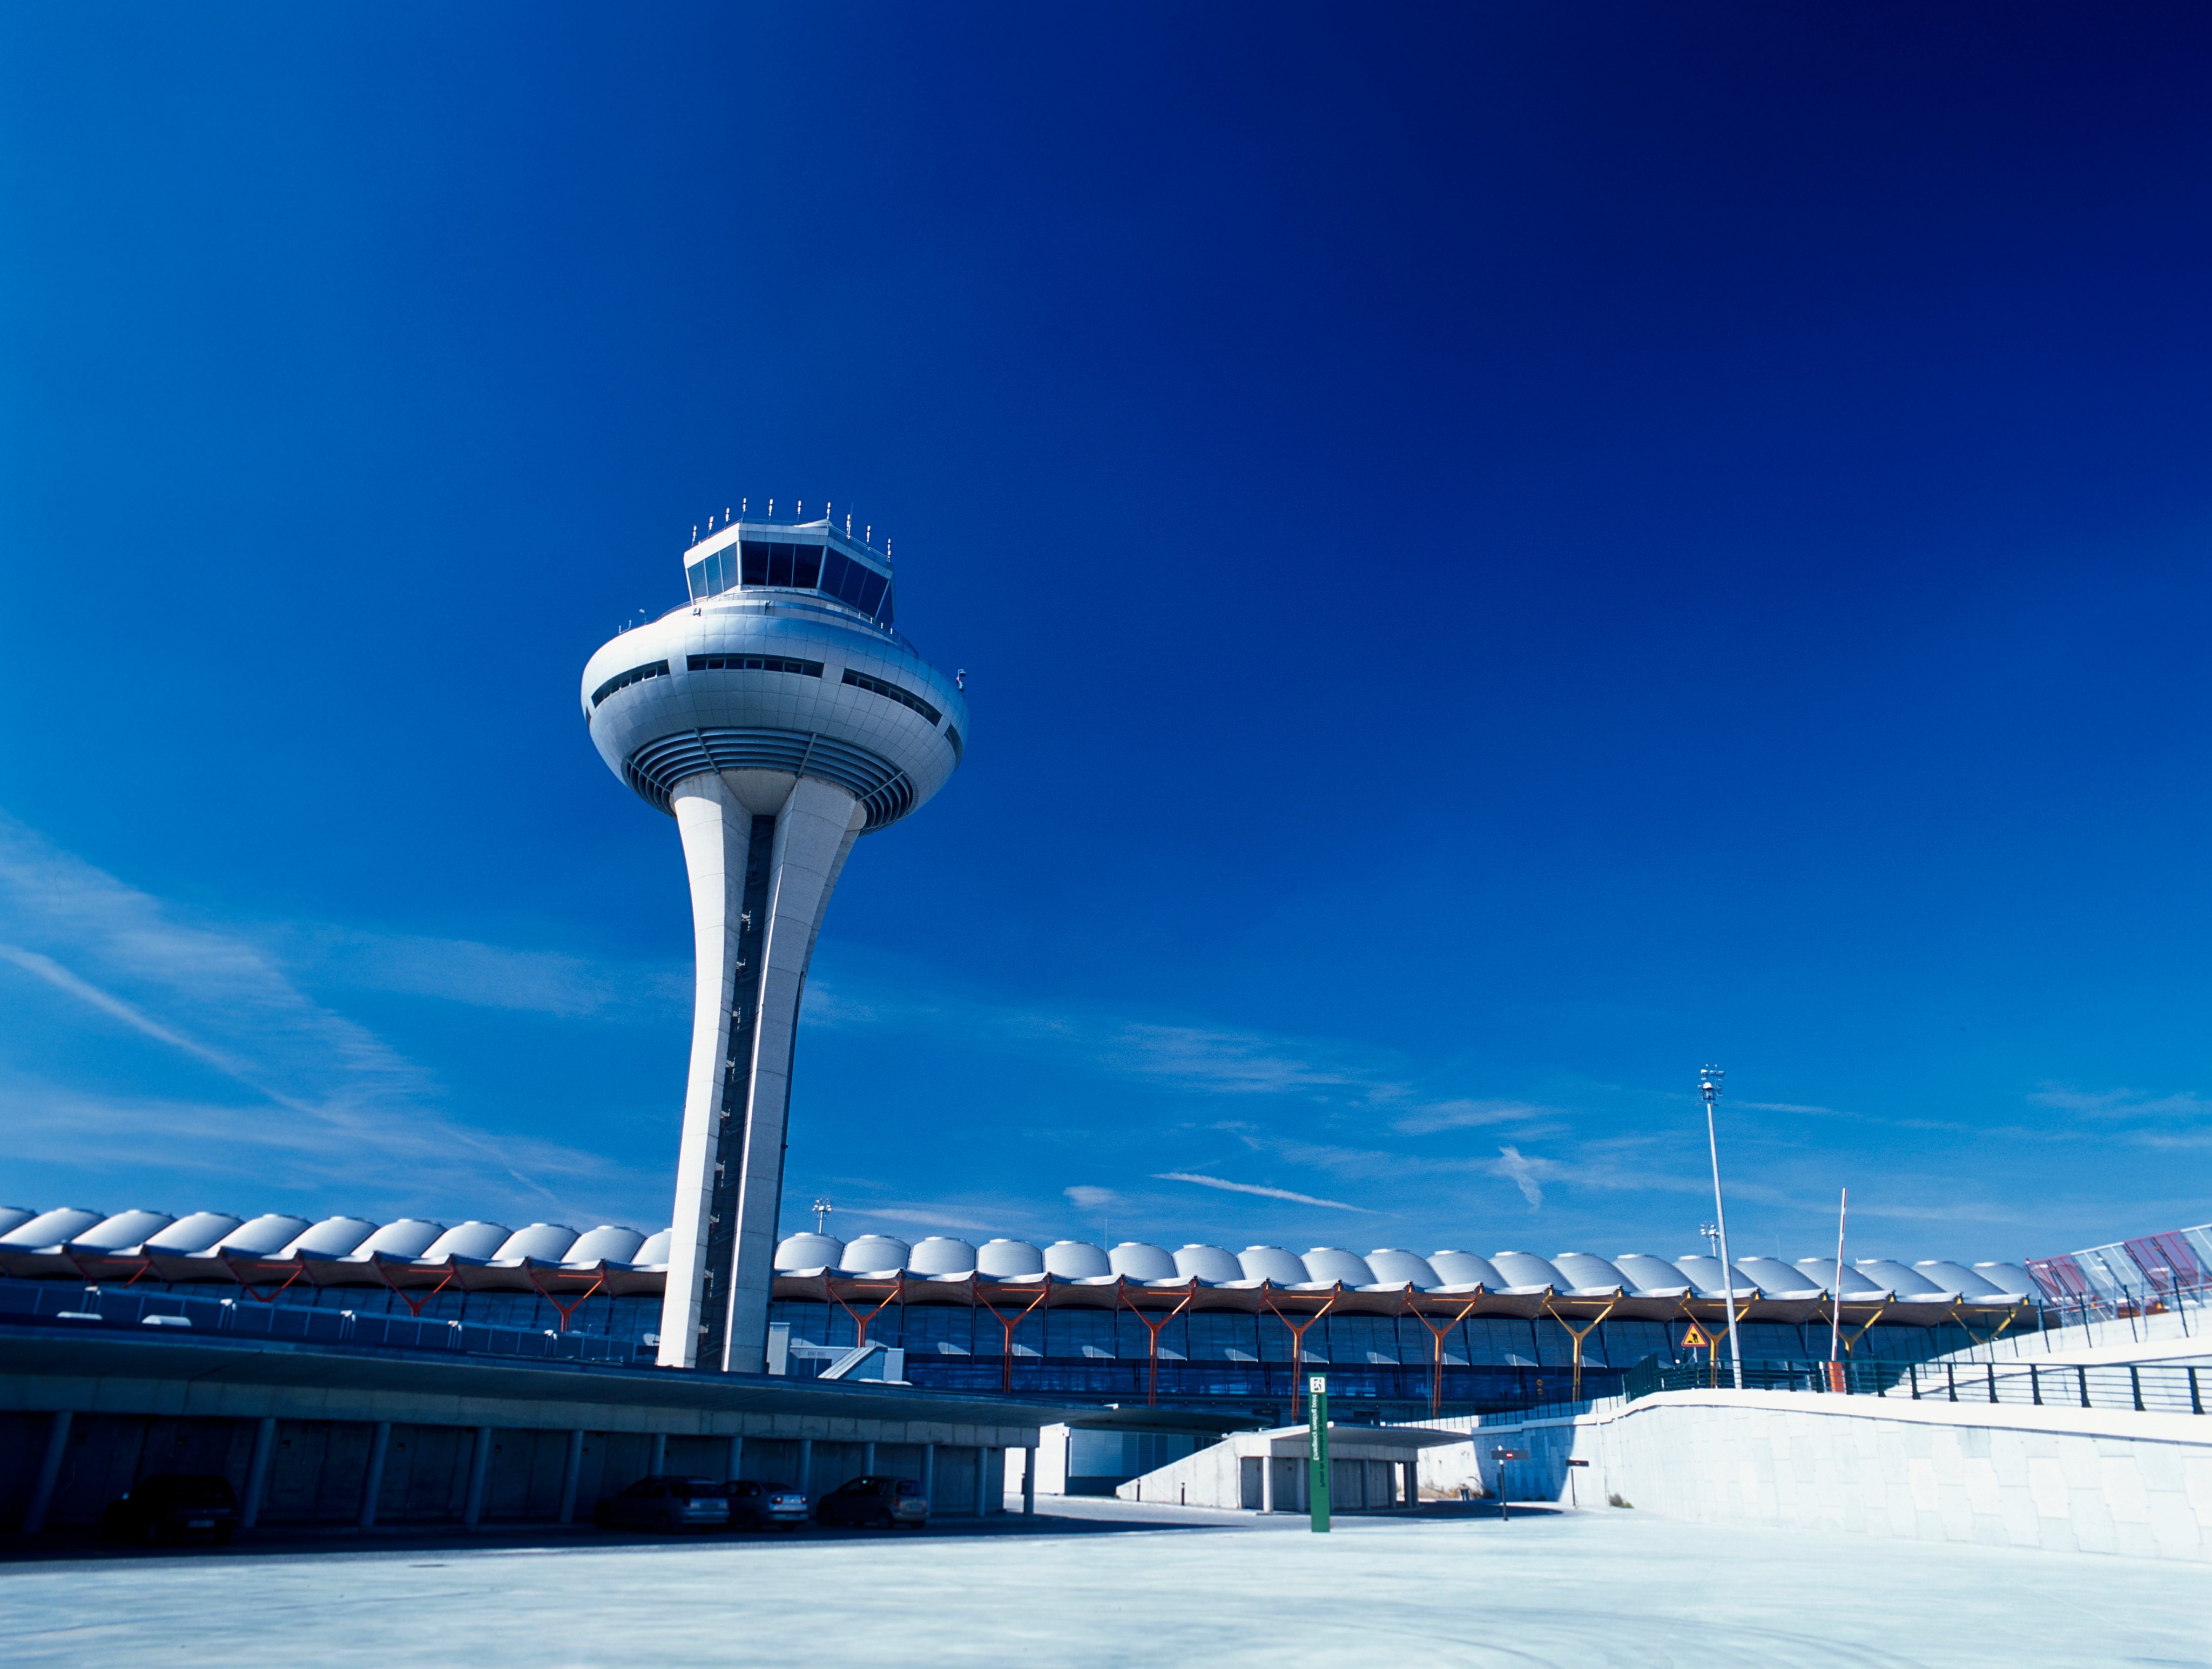 Madrid Barajas International Airport. (Spain) New terminal designed by Lamela - Richard Rogers Partnership arquitects.